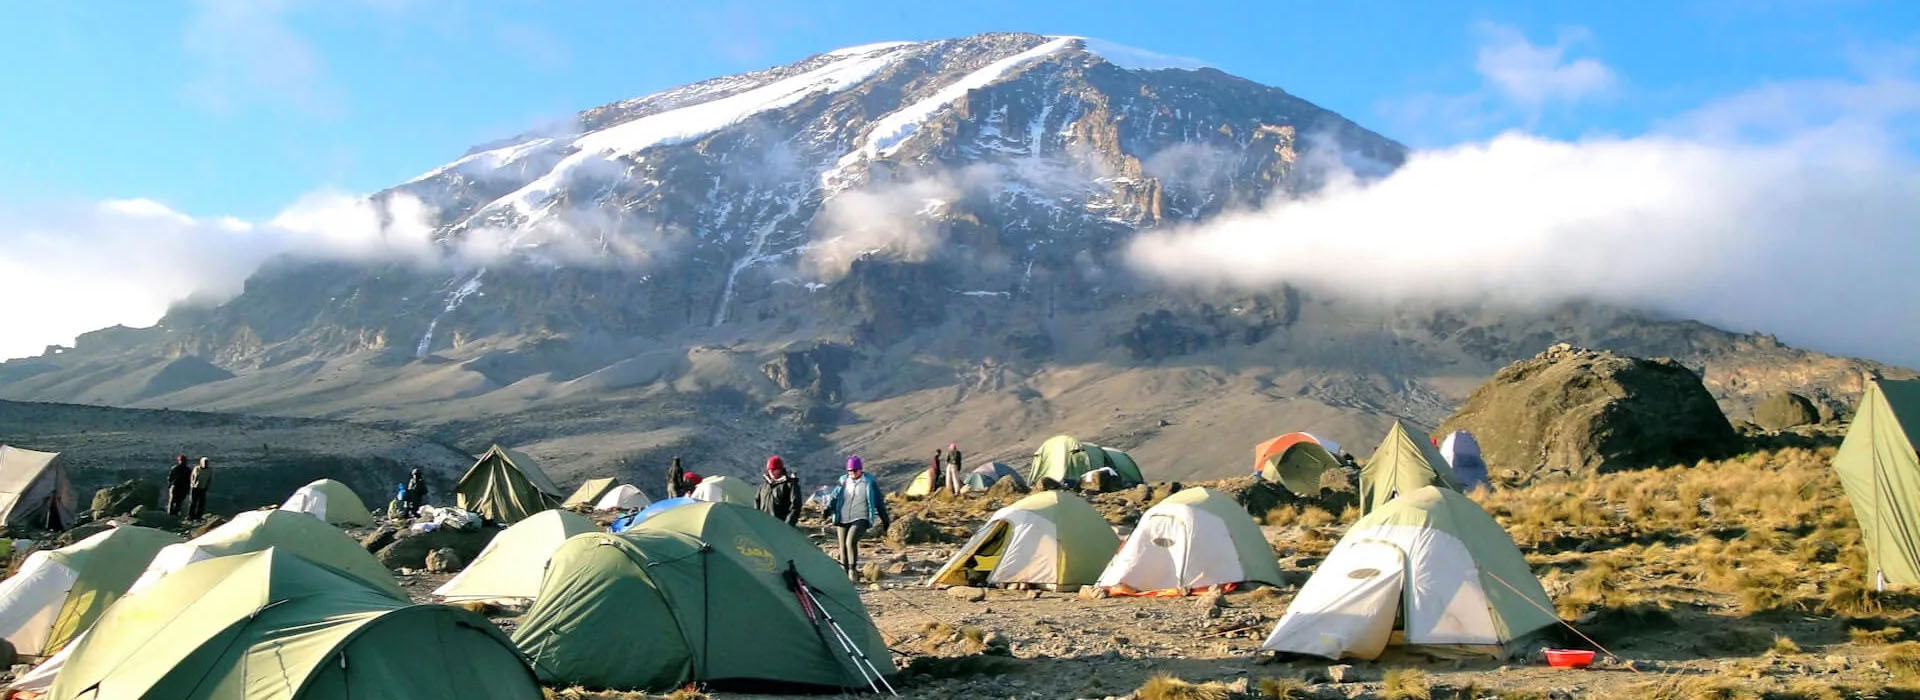 Kilimanjaro Guide